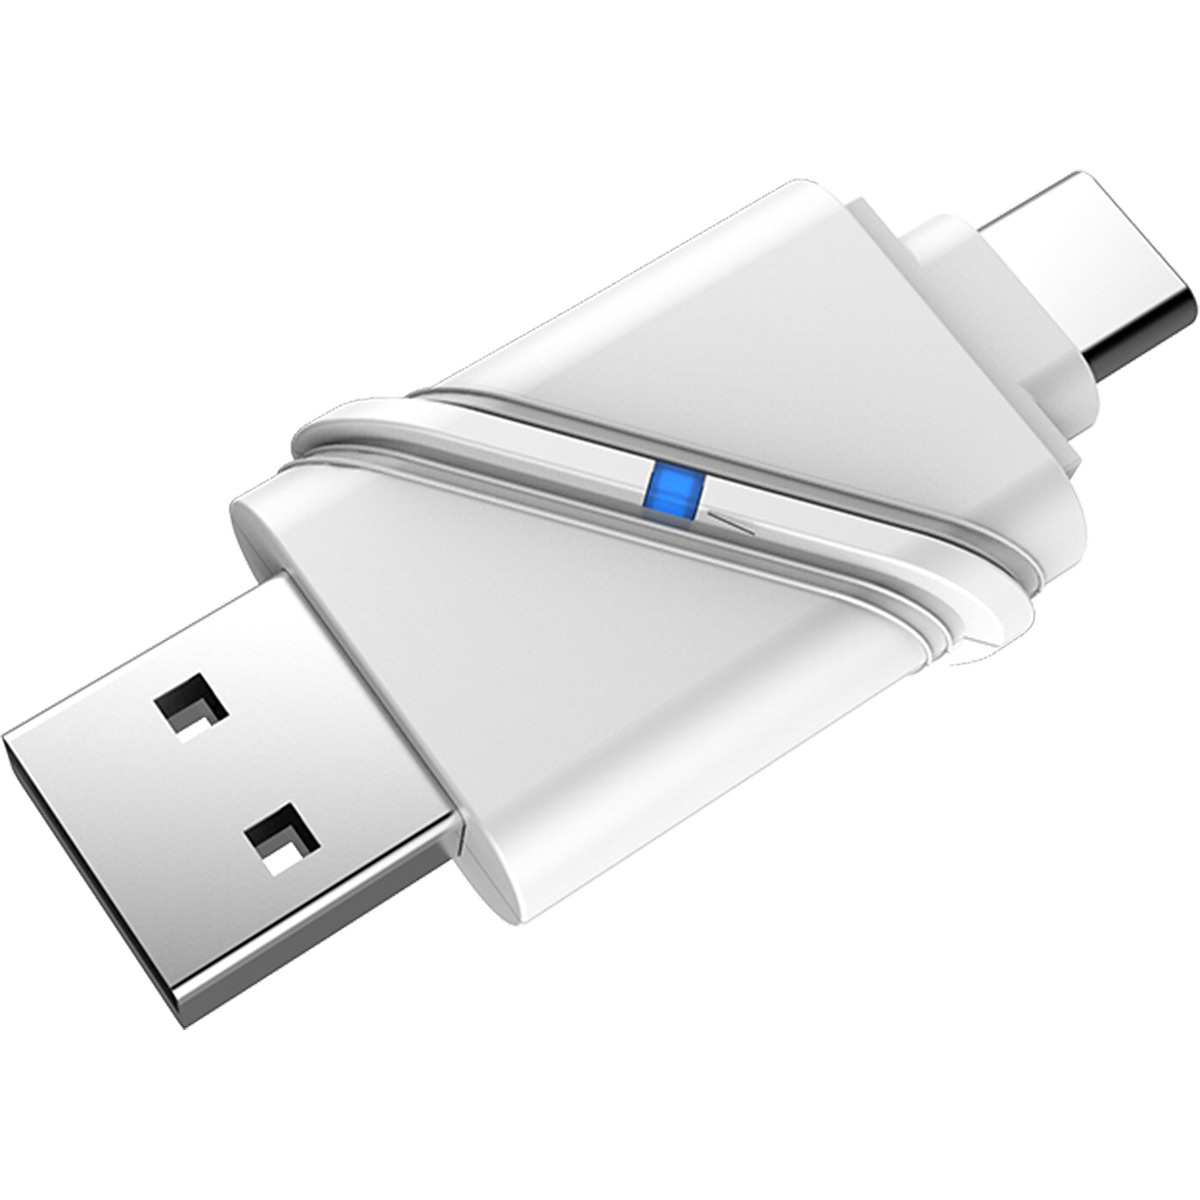 Kortläsare USB-A, USB-C till Micro SD, USB 3.1